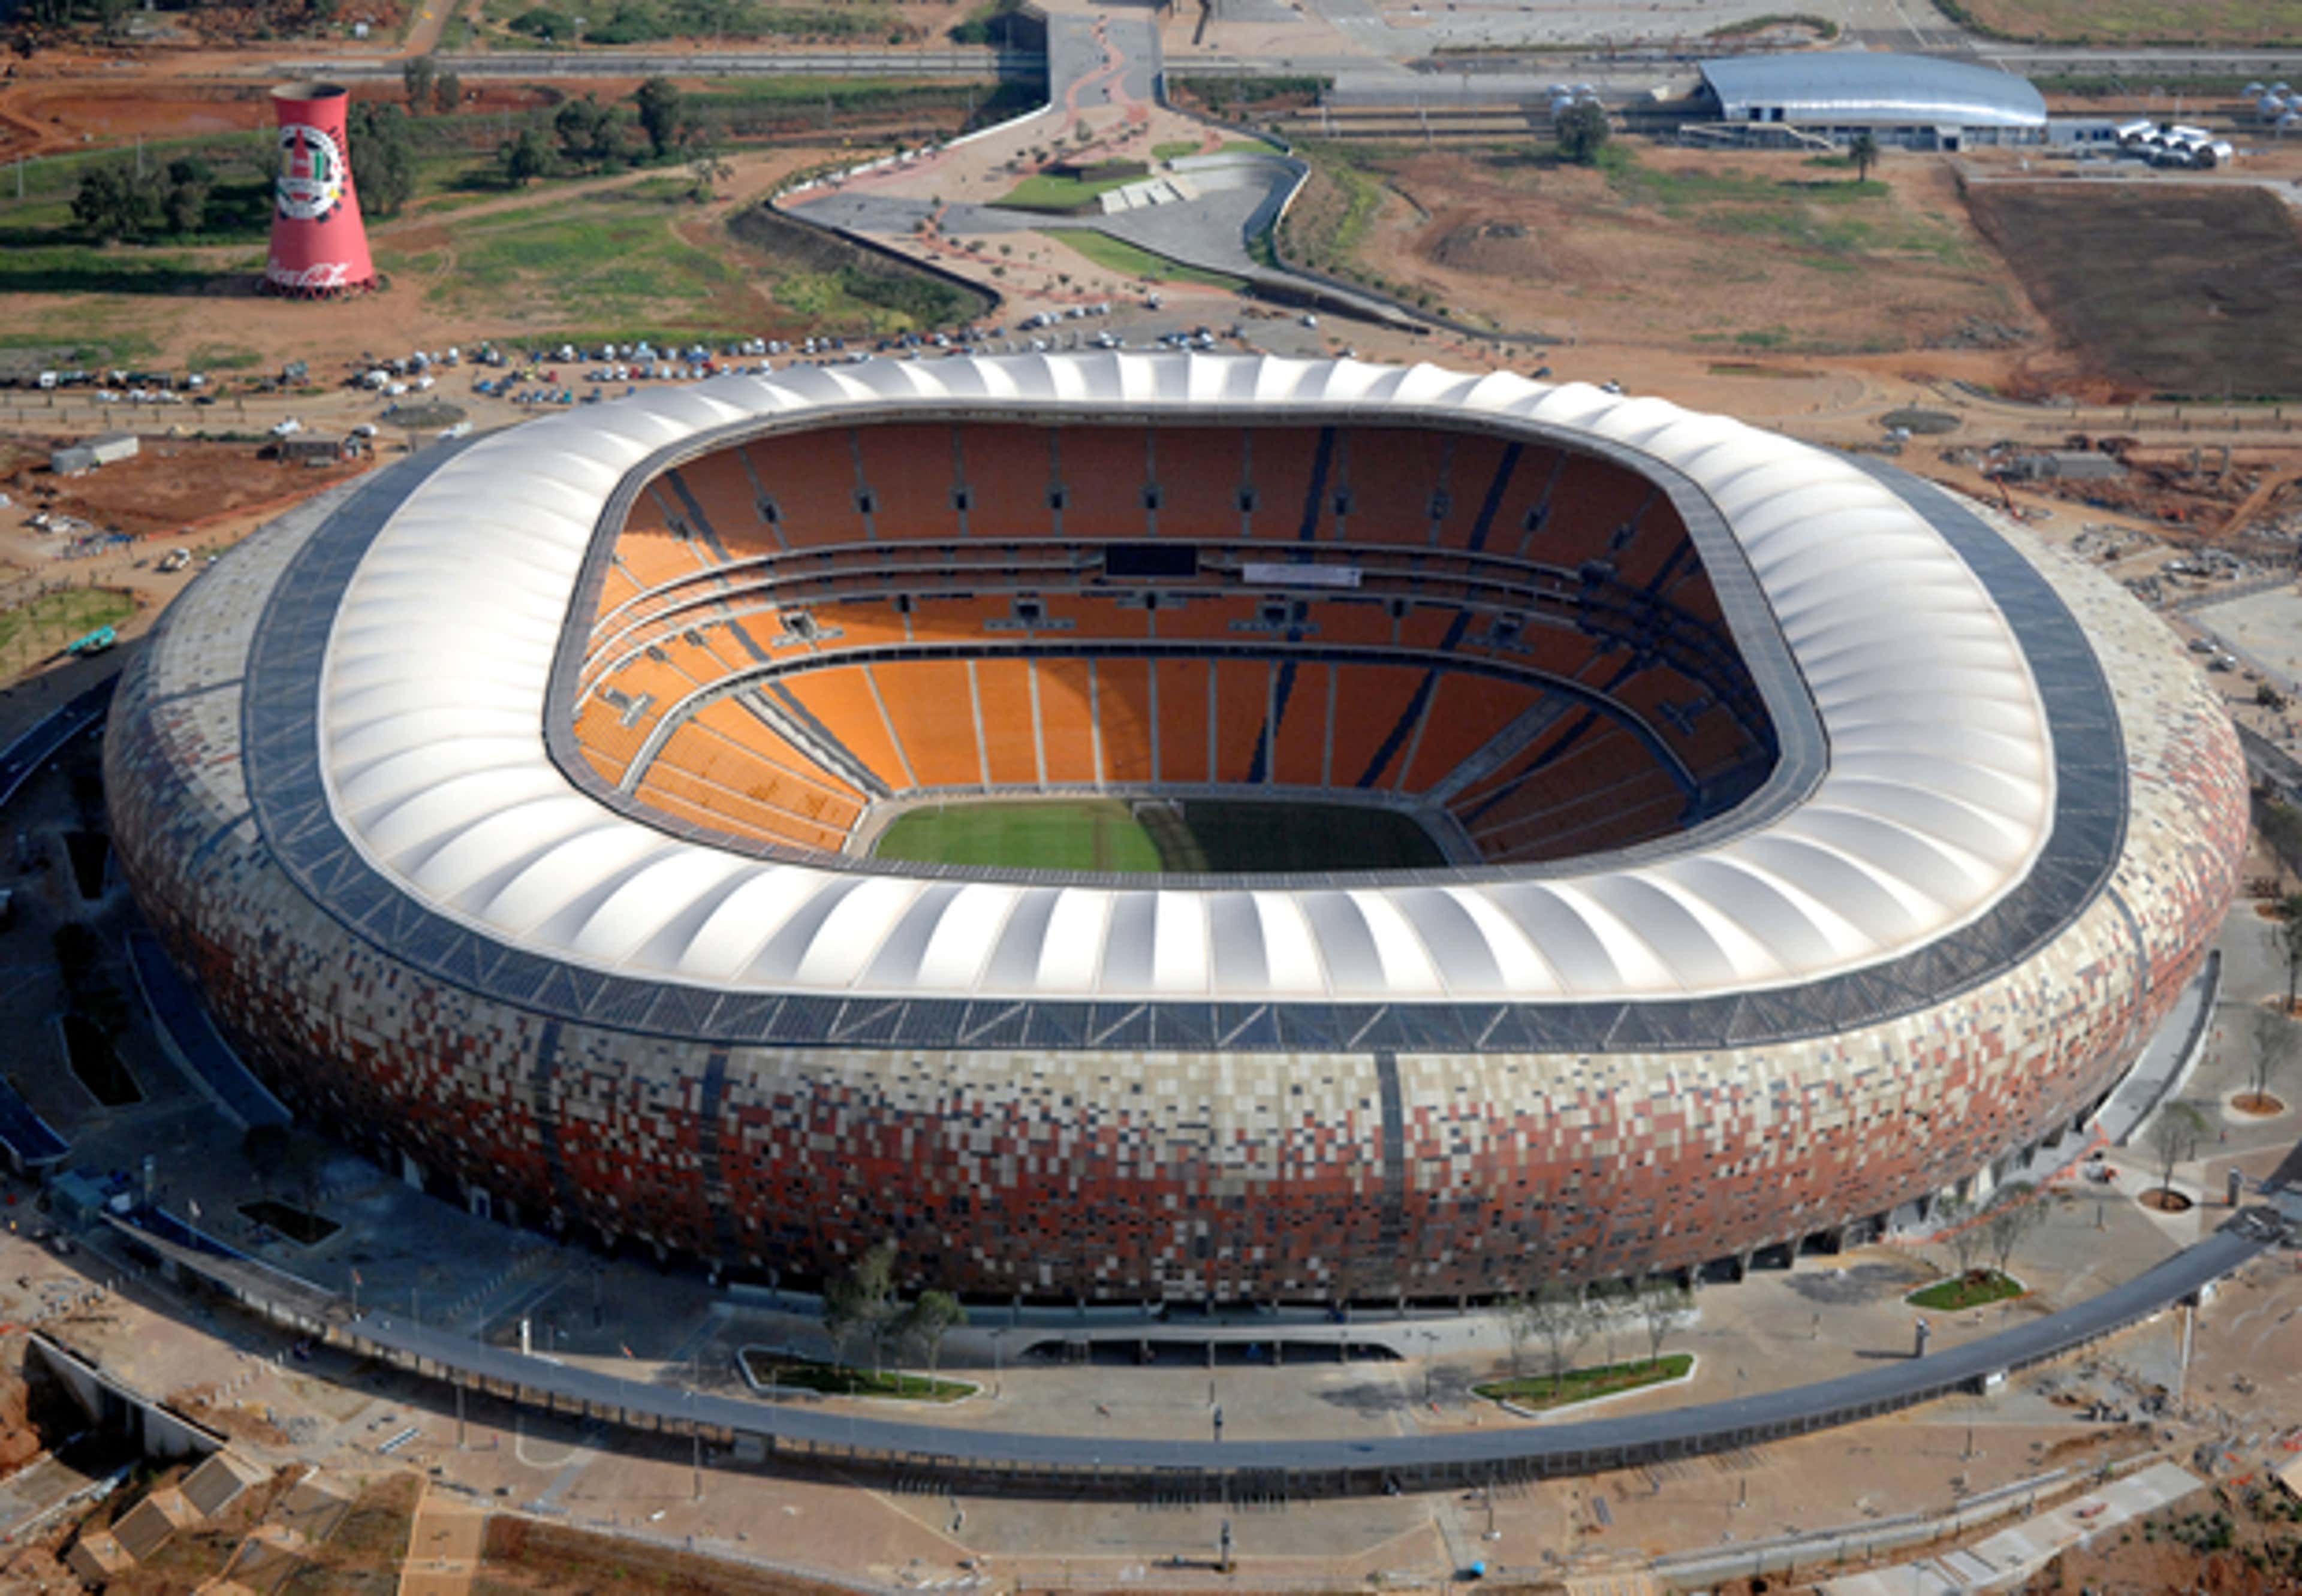 Топ стадионов. Стадион СОККЕР Сити Йоханнесбург. СОККЕР Сити — Йоханнесбург, ЮАР. СОККЕР Сити стадион ЮАР. Футбольный стадион в Йоханнесбурге.